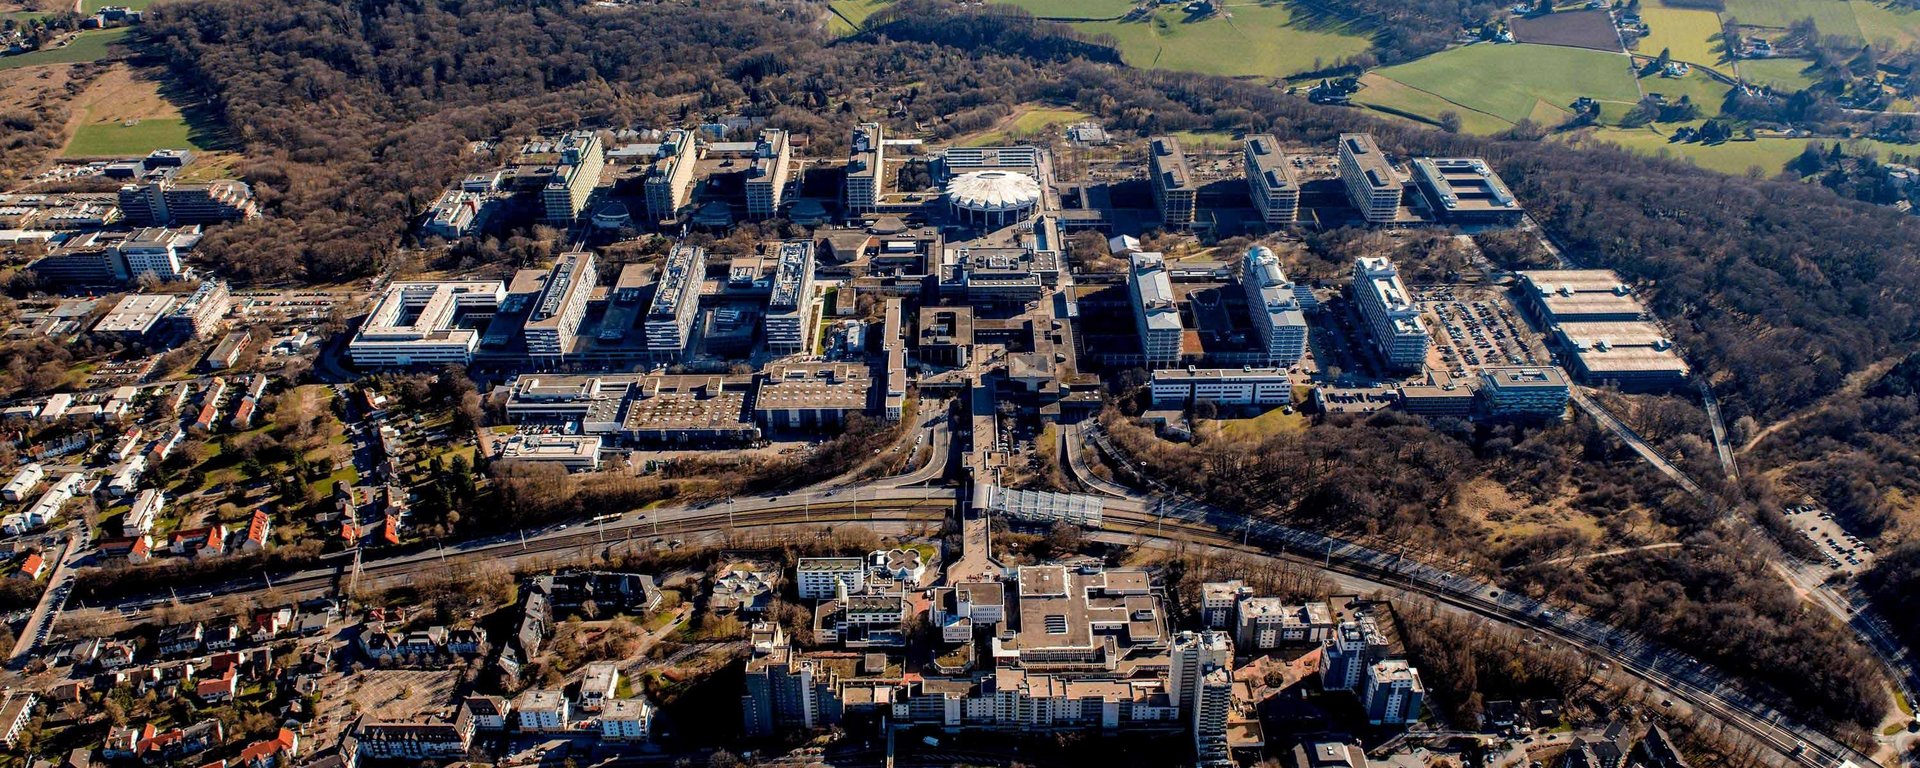 Luftbild Ruhr-Universität Bochum